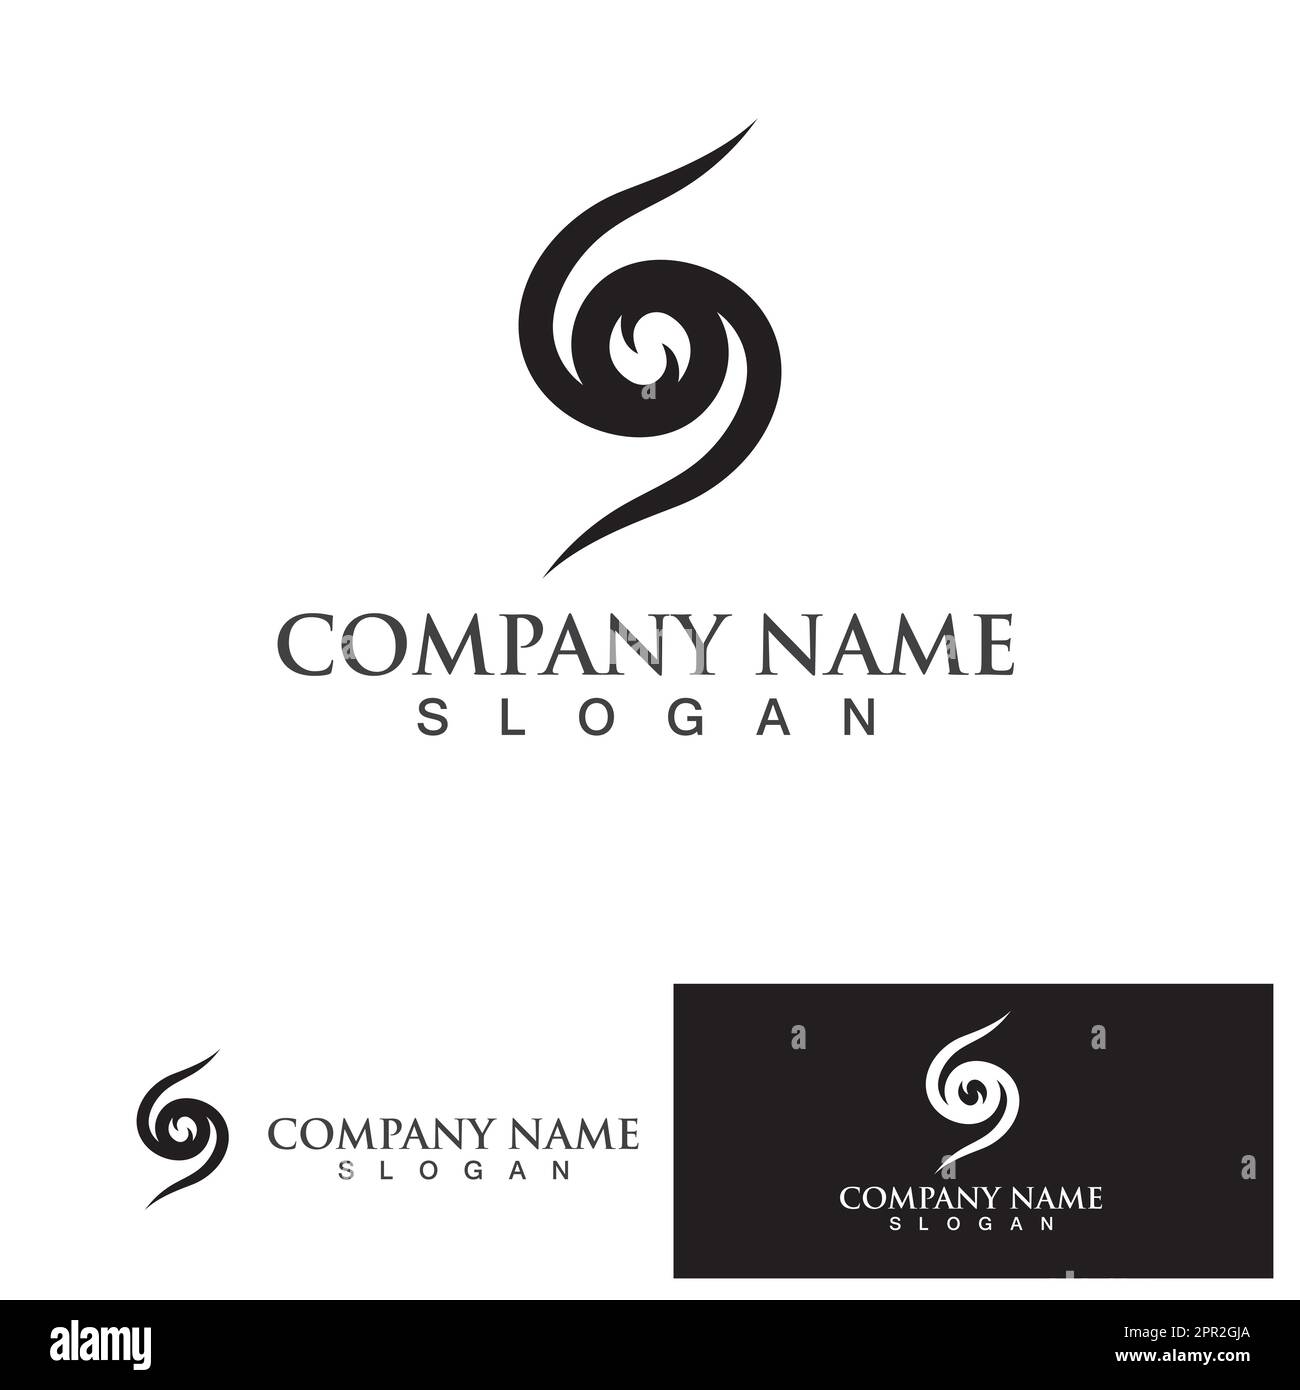 S logo design vector.Business corporate letter Stock Vector